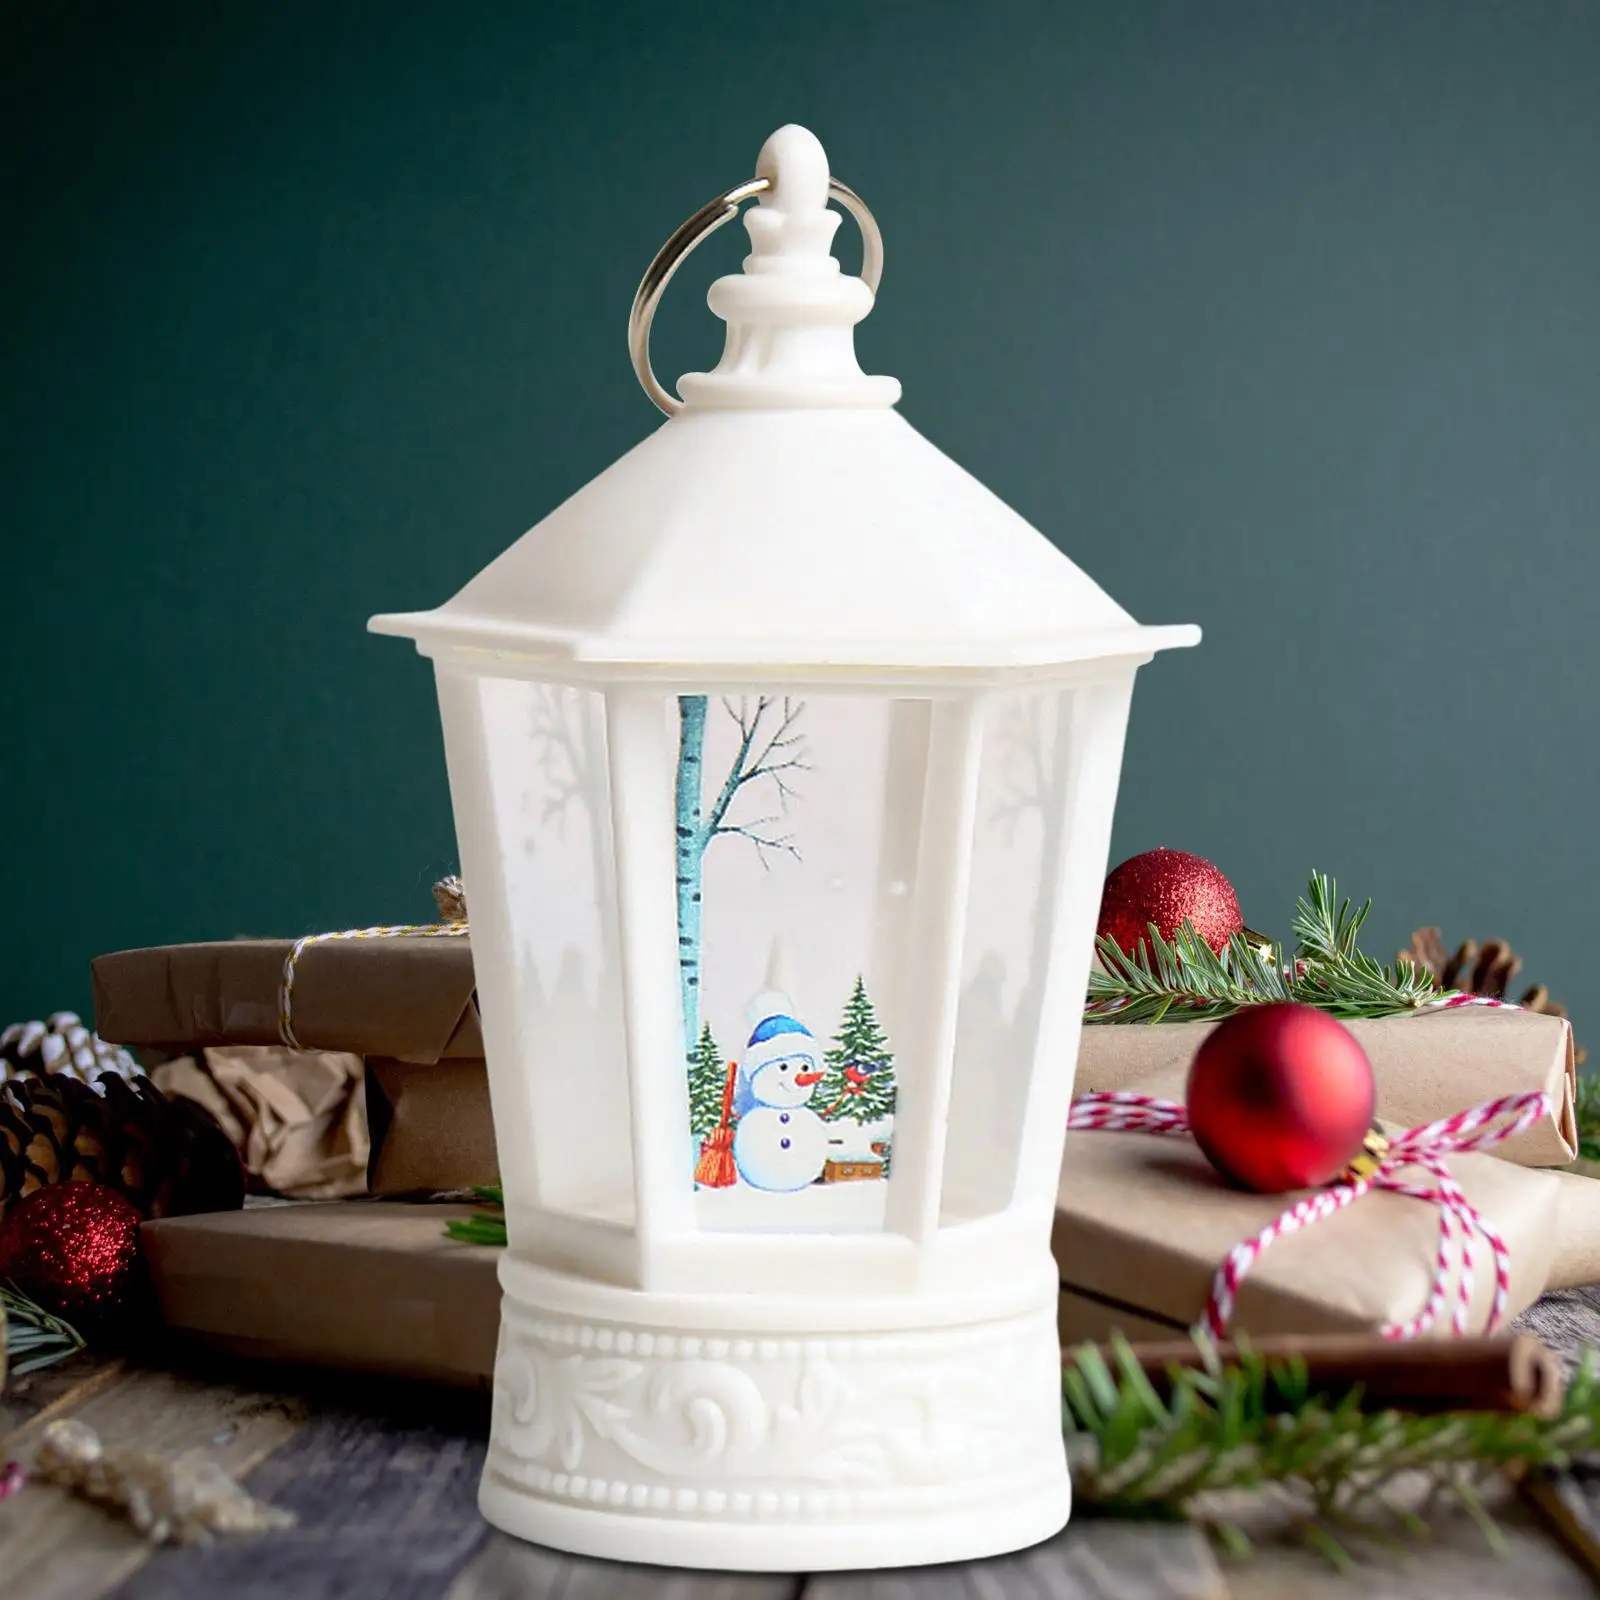 Vintage Style Lantern Light Decorative Ornaments Props Landscape LED Table Lamp for Festival Bedroom Garden Holiday Halloween